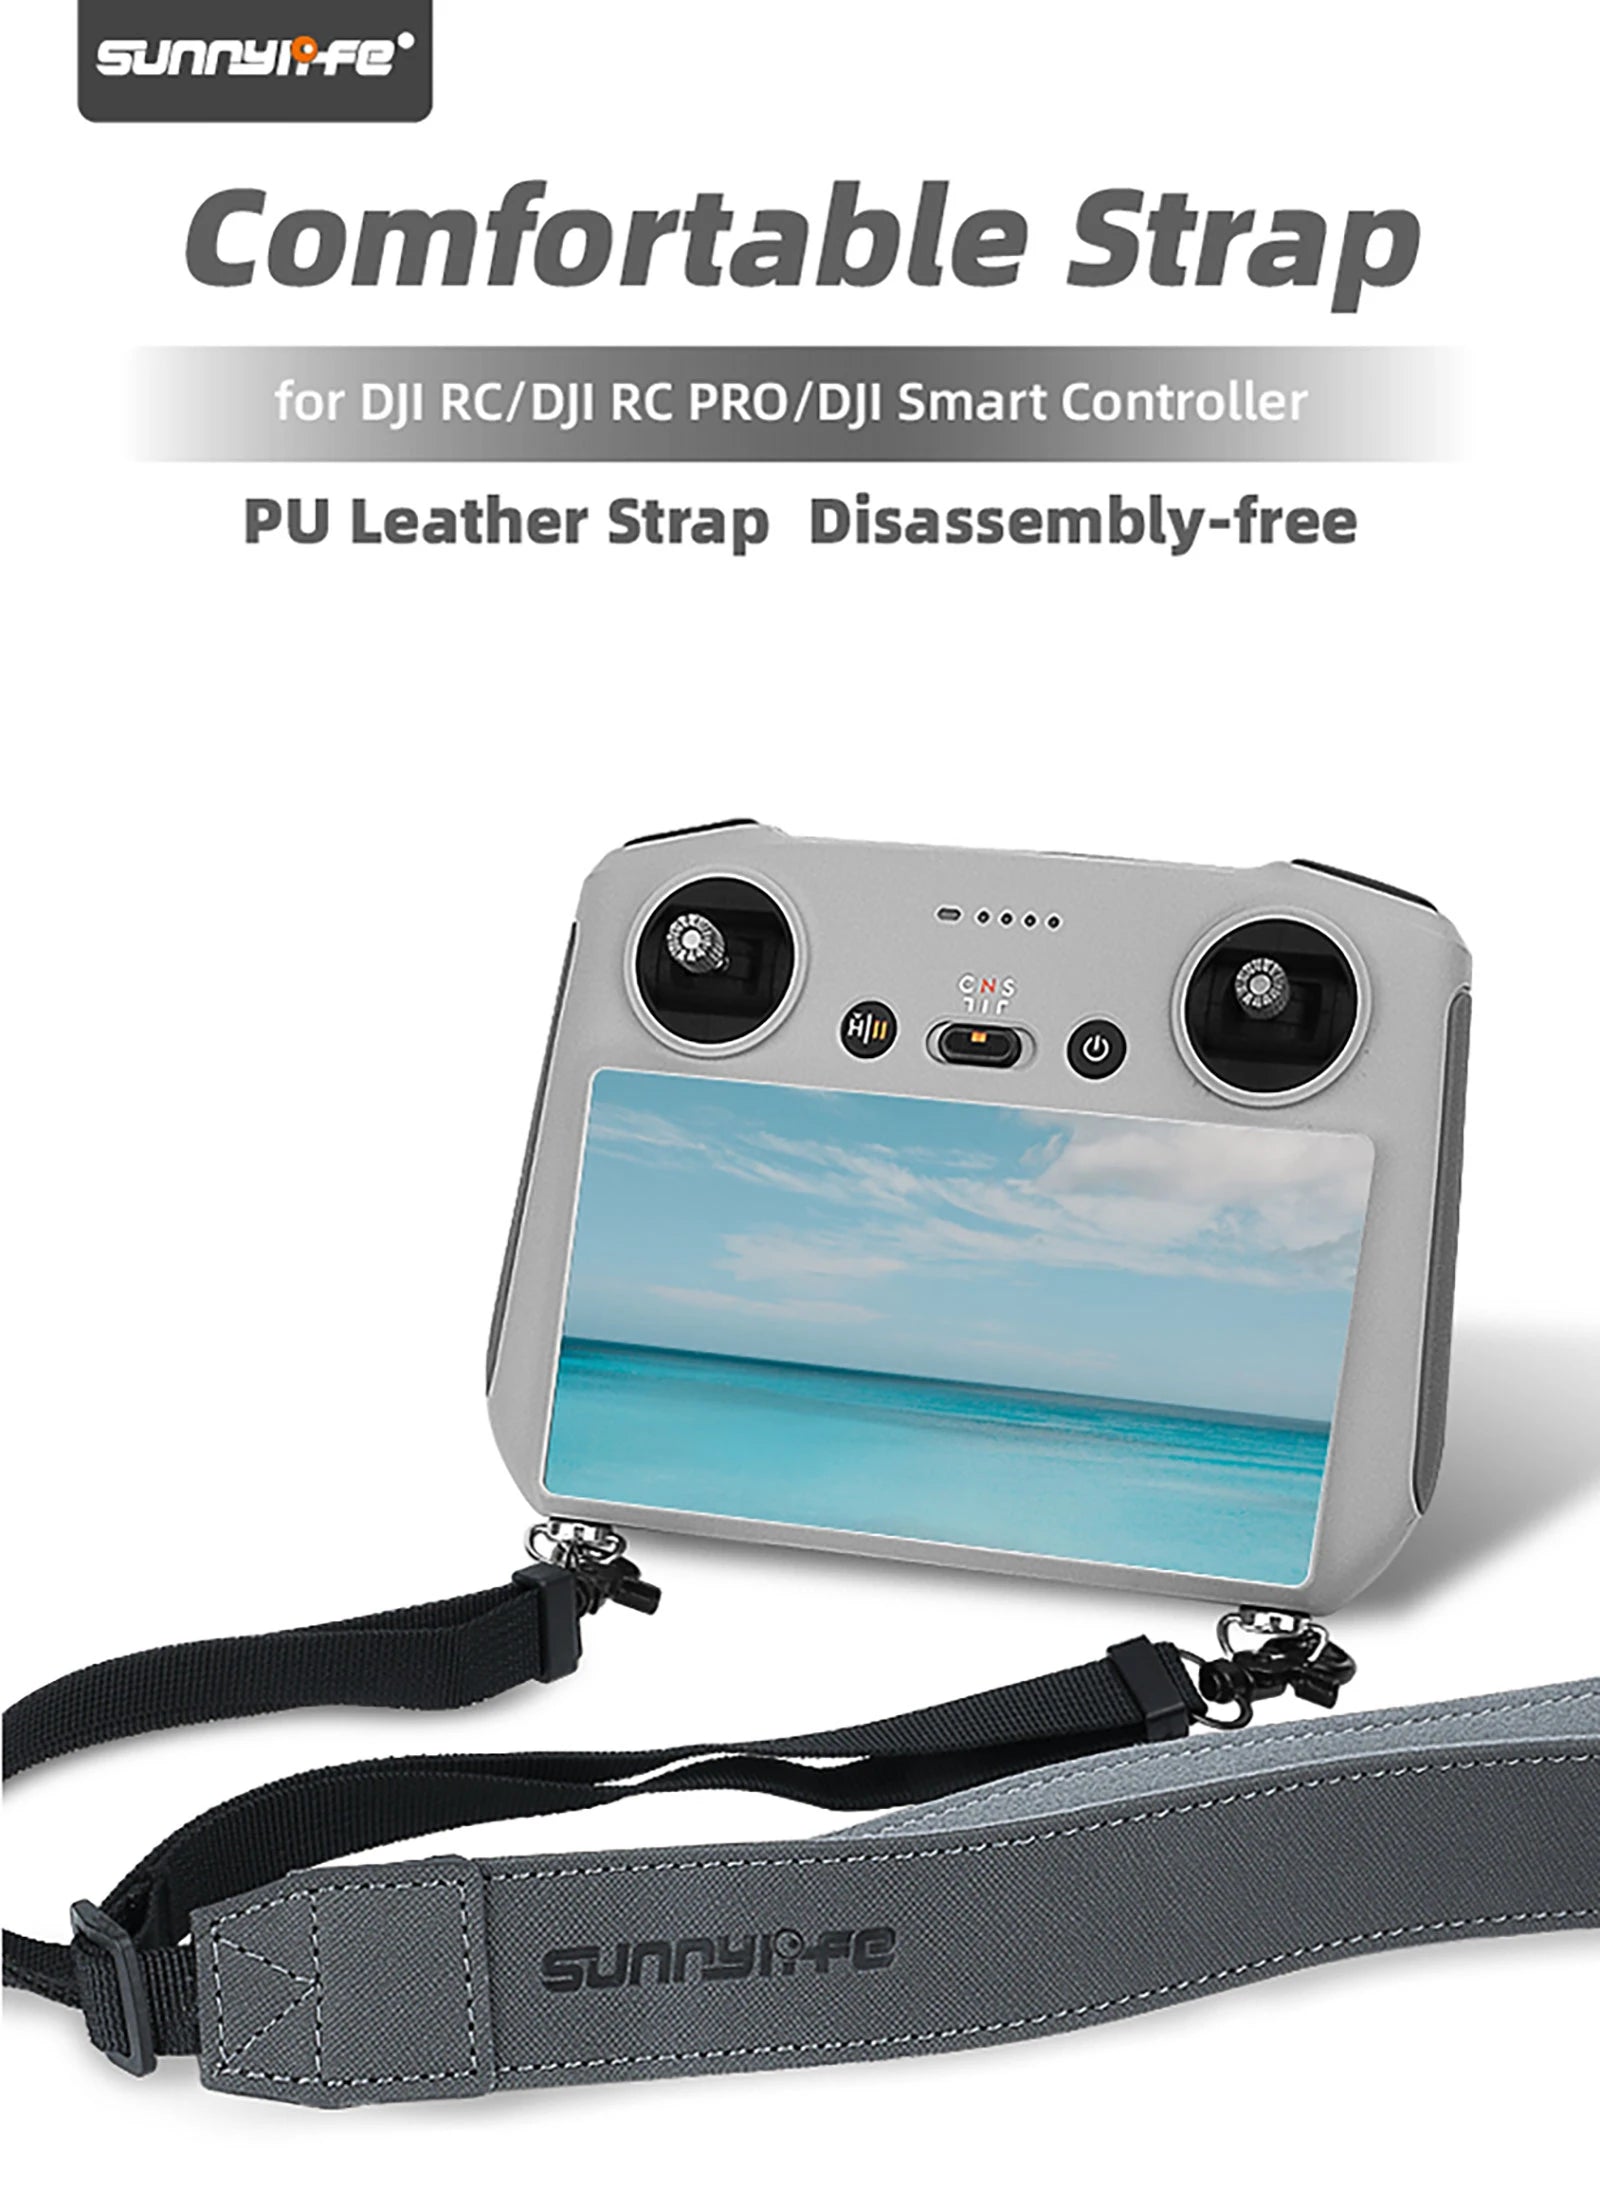 Lanyard For DJI RC/RC 2/RC Pro/Smart Controller, PU Leather Strap for DJI RCI/DJI RC PRO/D